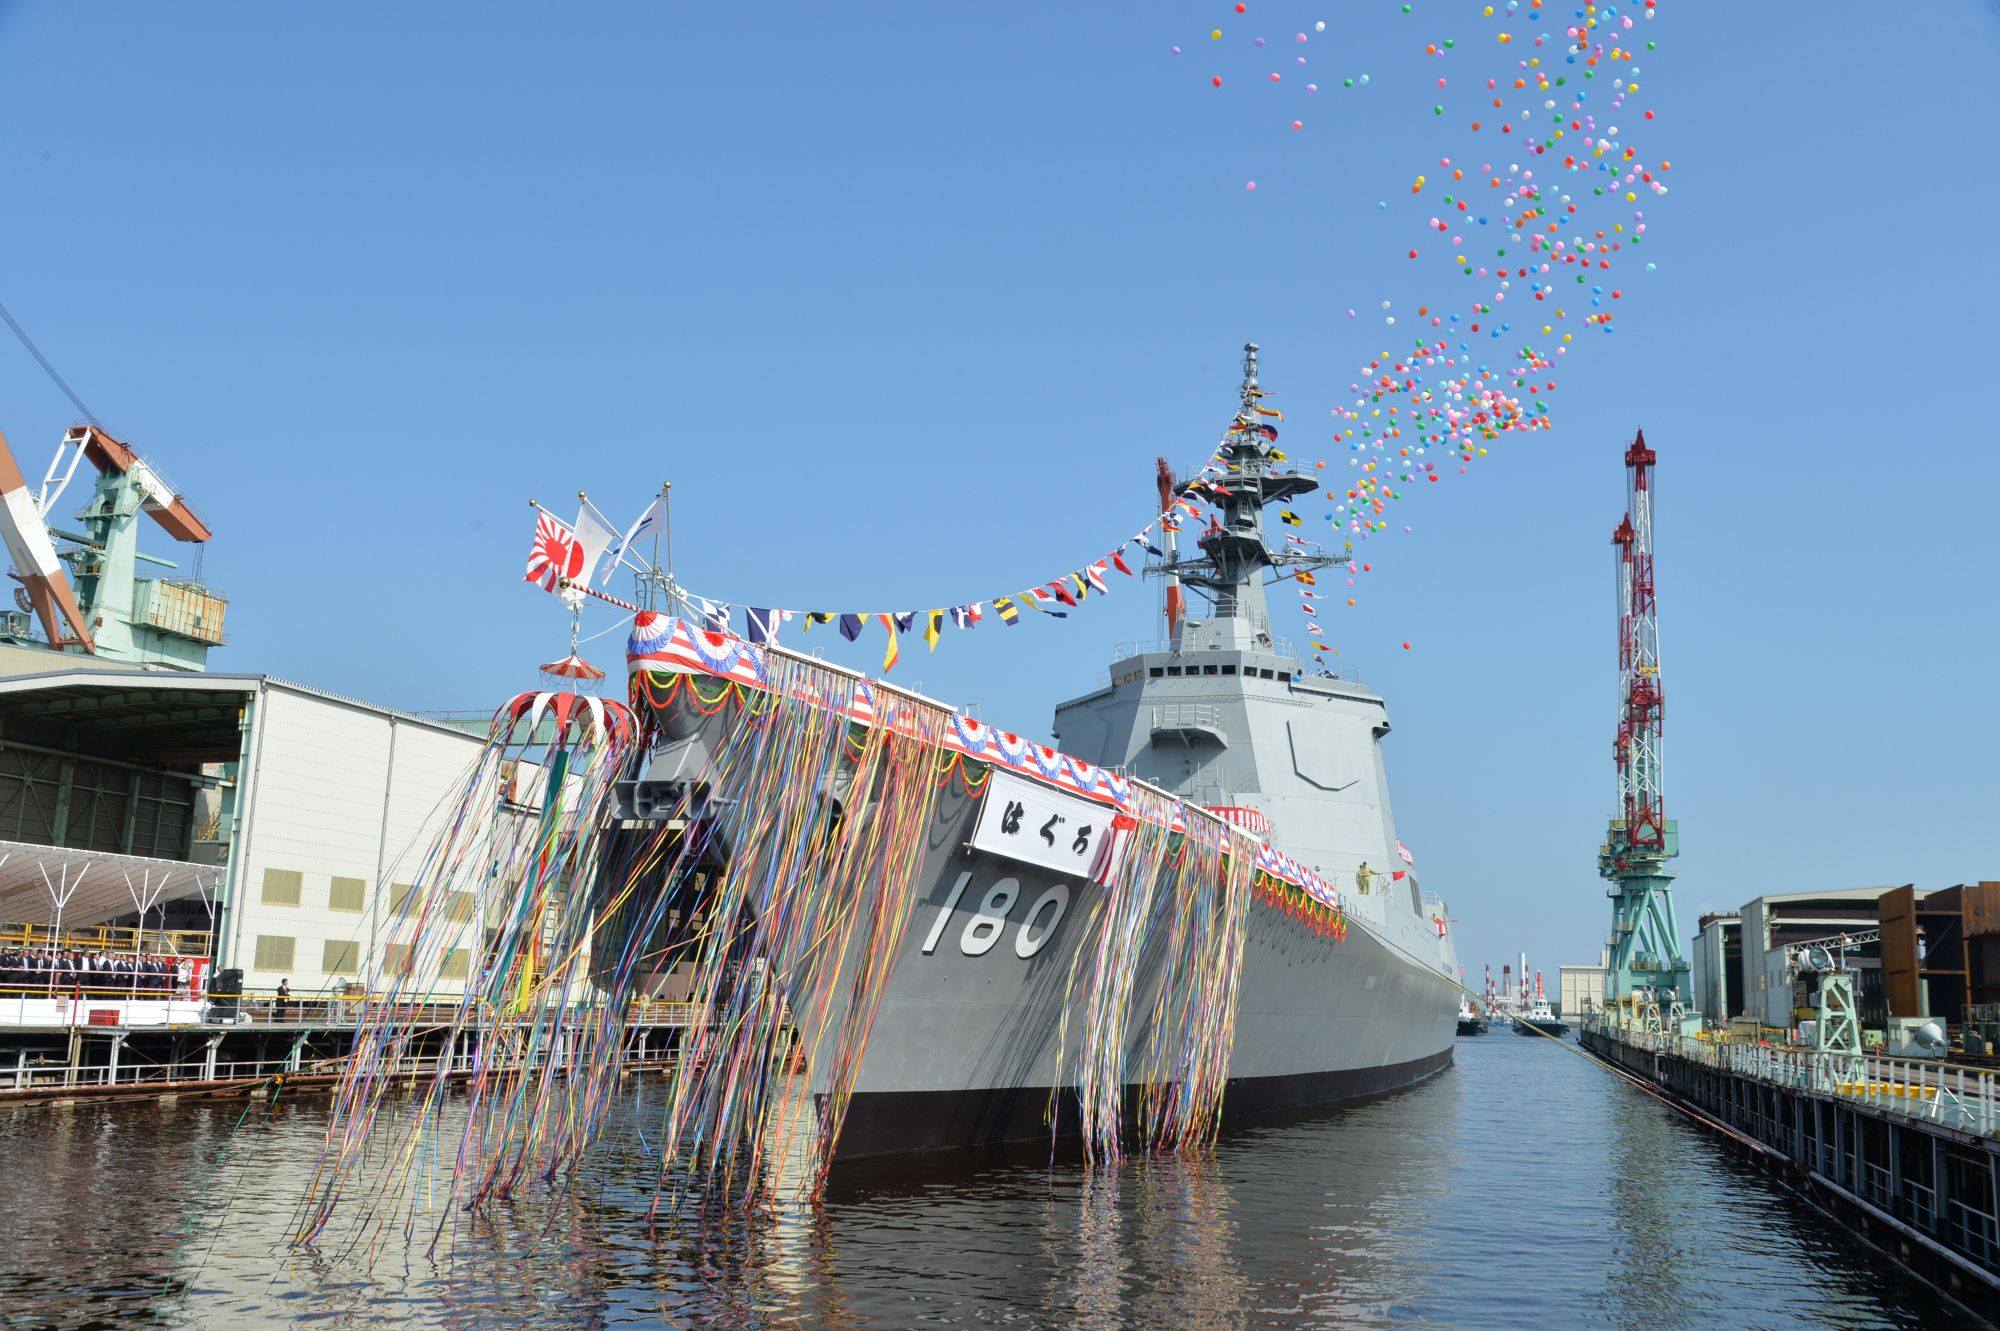 Maya-class destroyer Haguru